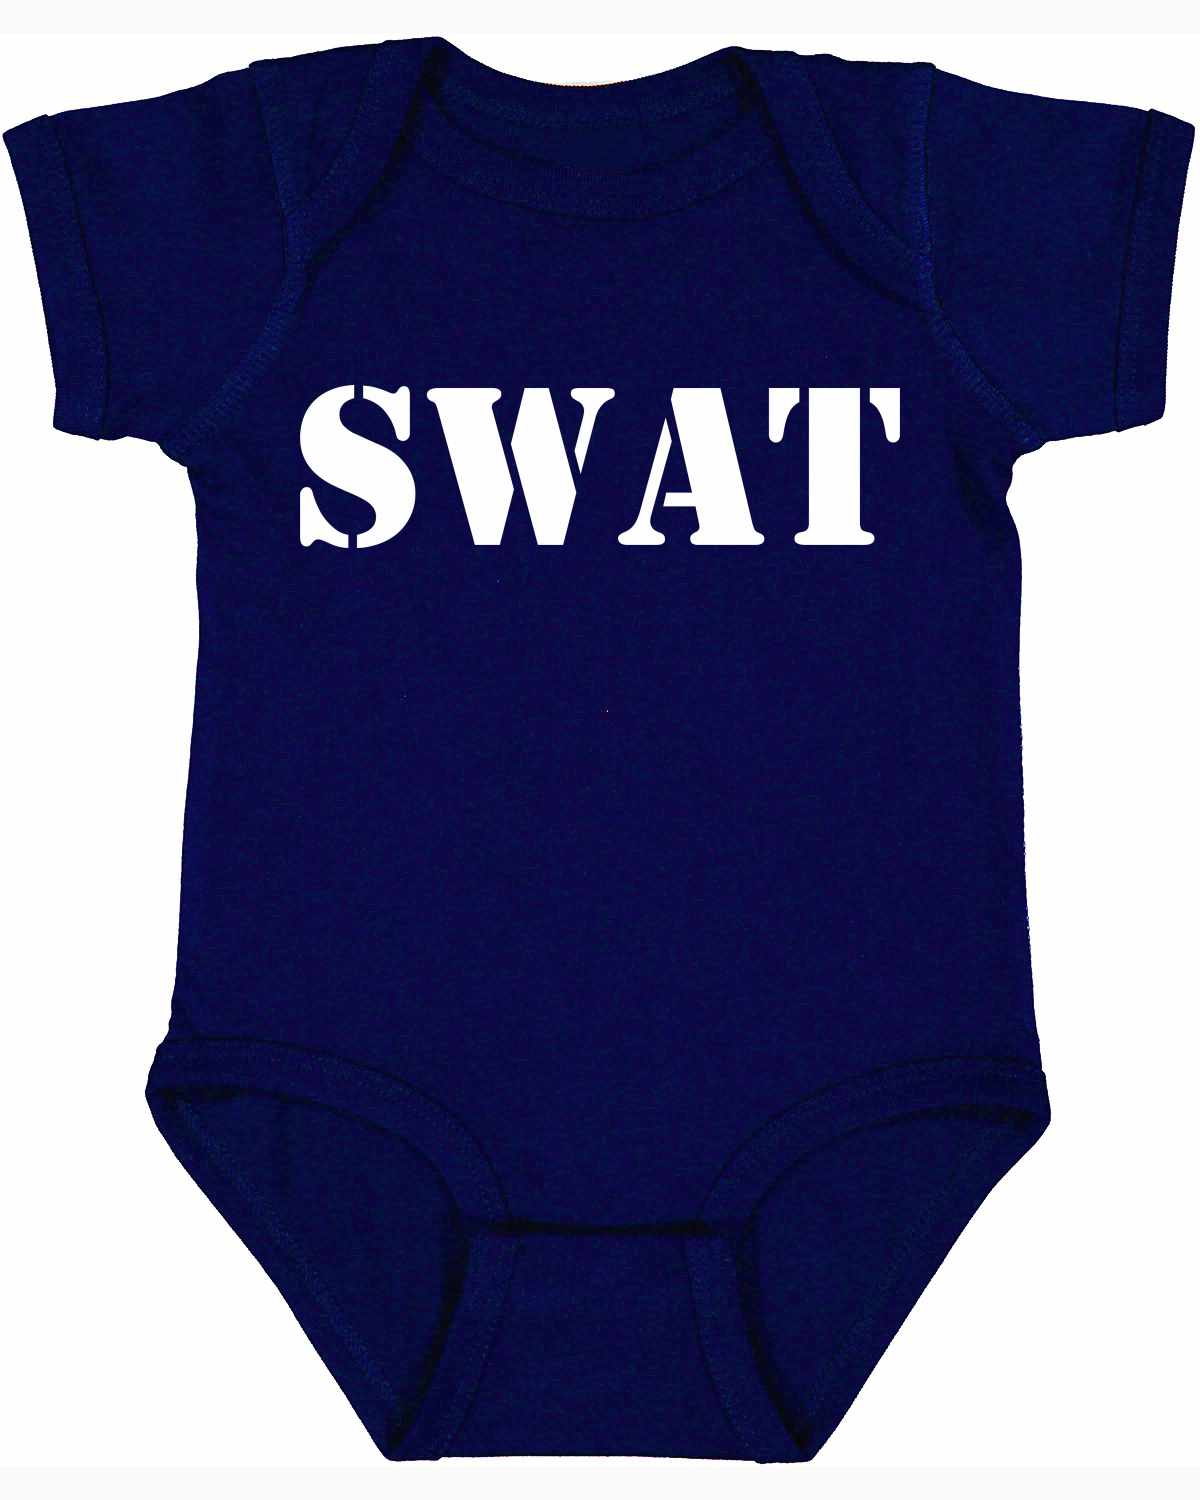 SWAT on Infant BodySuit